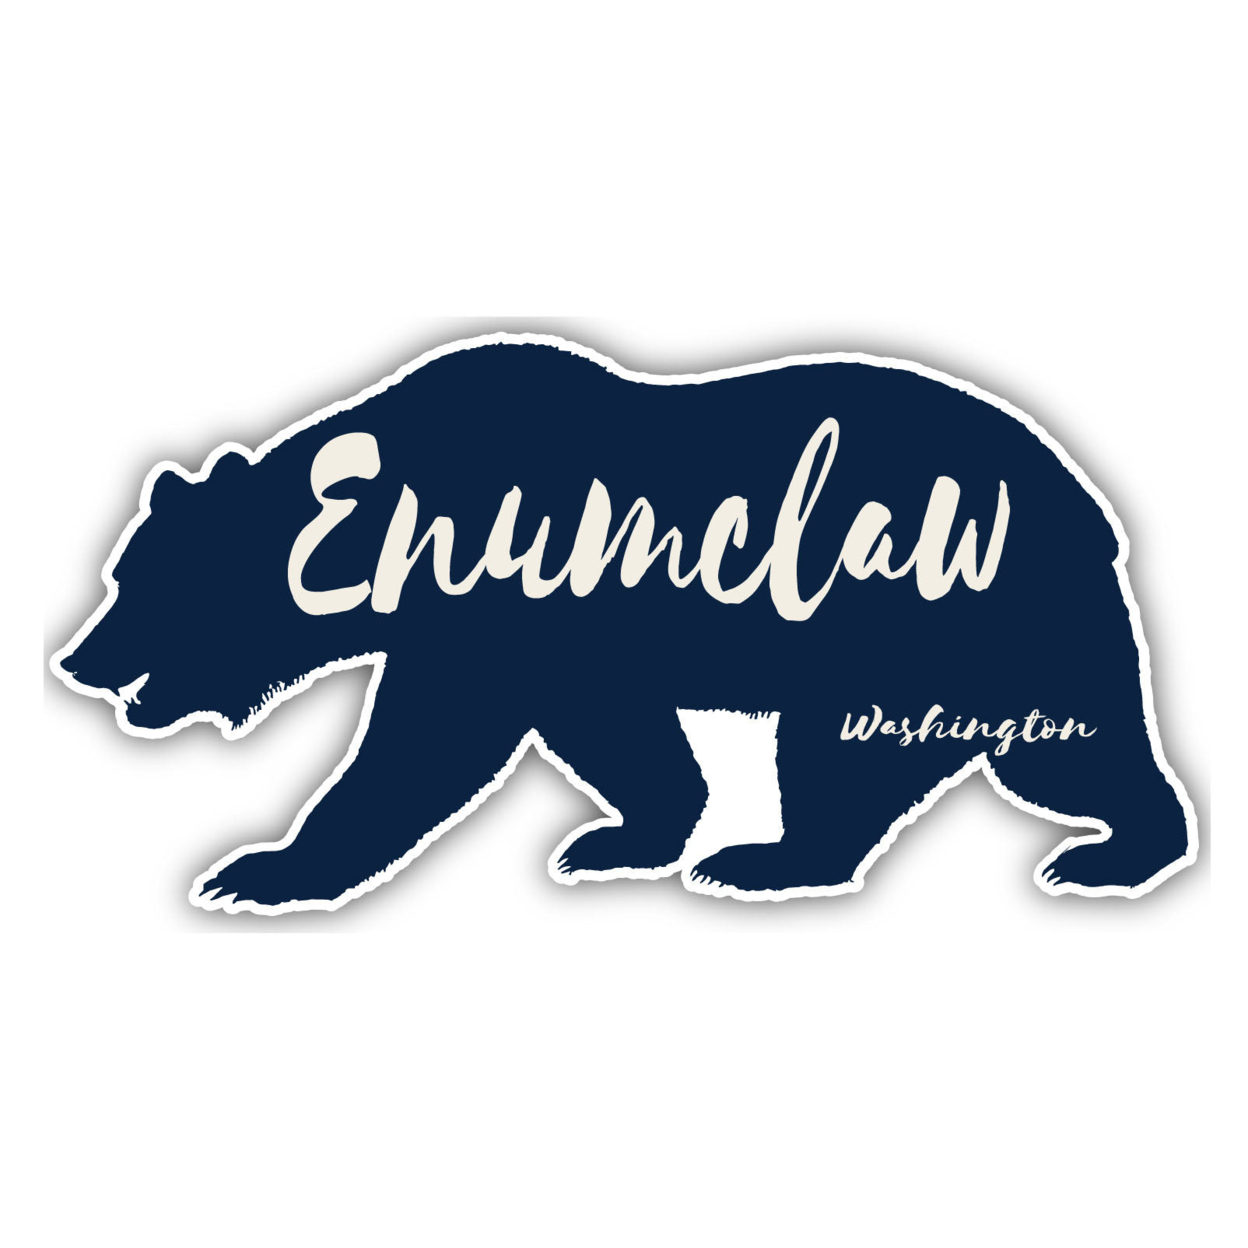 Enumclaw Washington Souvenir Decorative Stickers (Choose Theme And Size) - Single Unit, 2-Inch, Bear